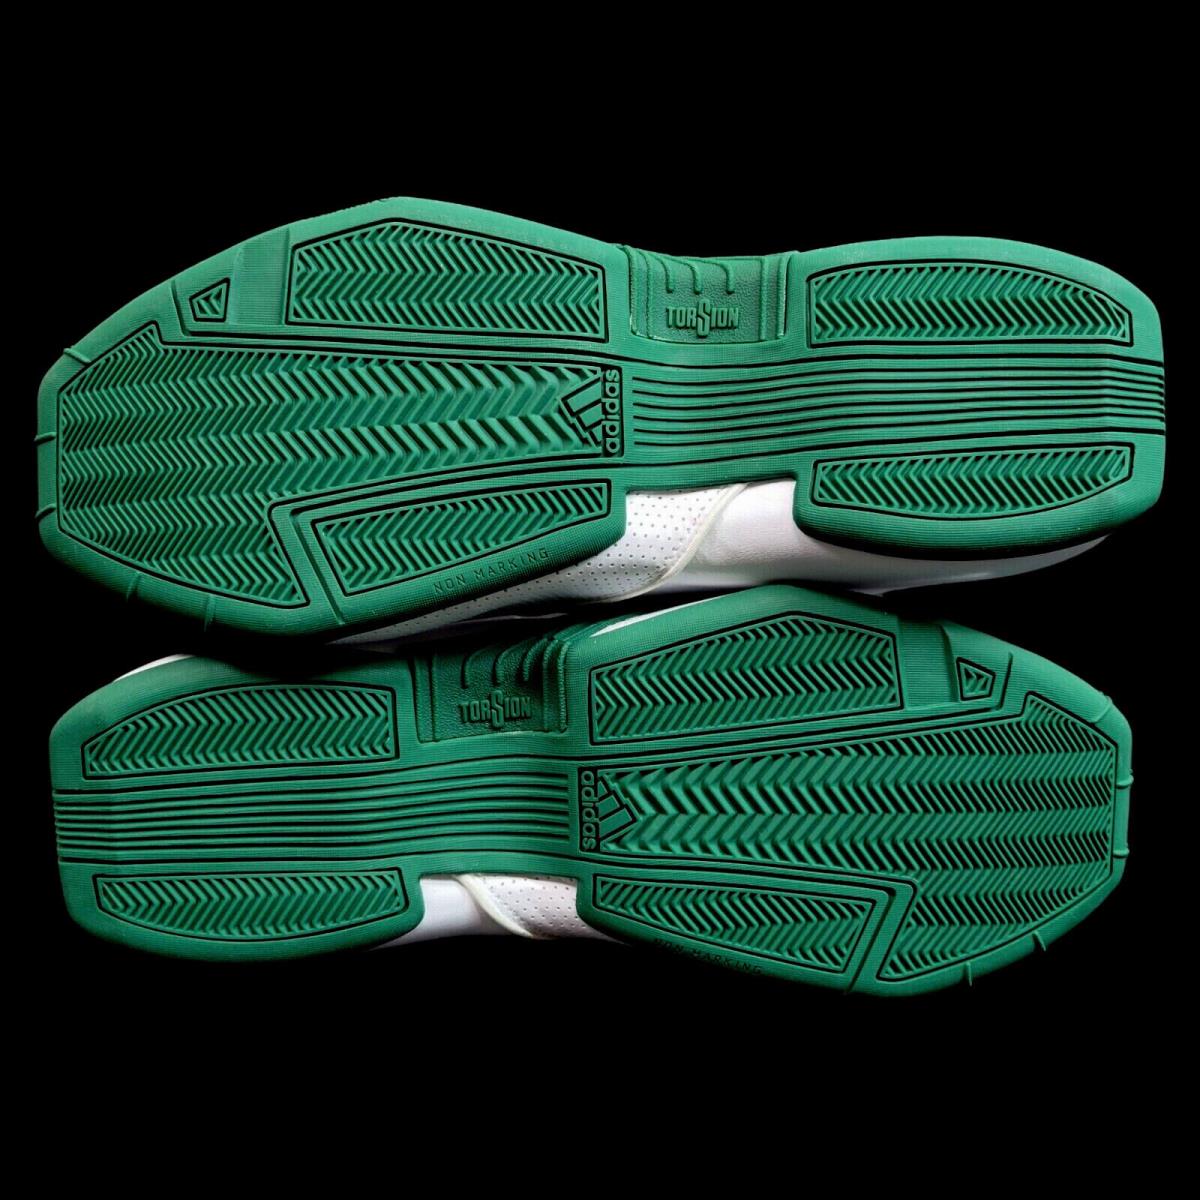 Adidas shoes  - Multicoloured 6